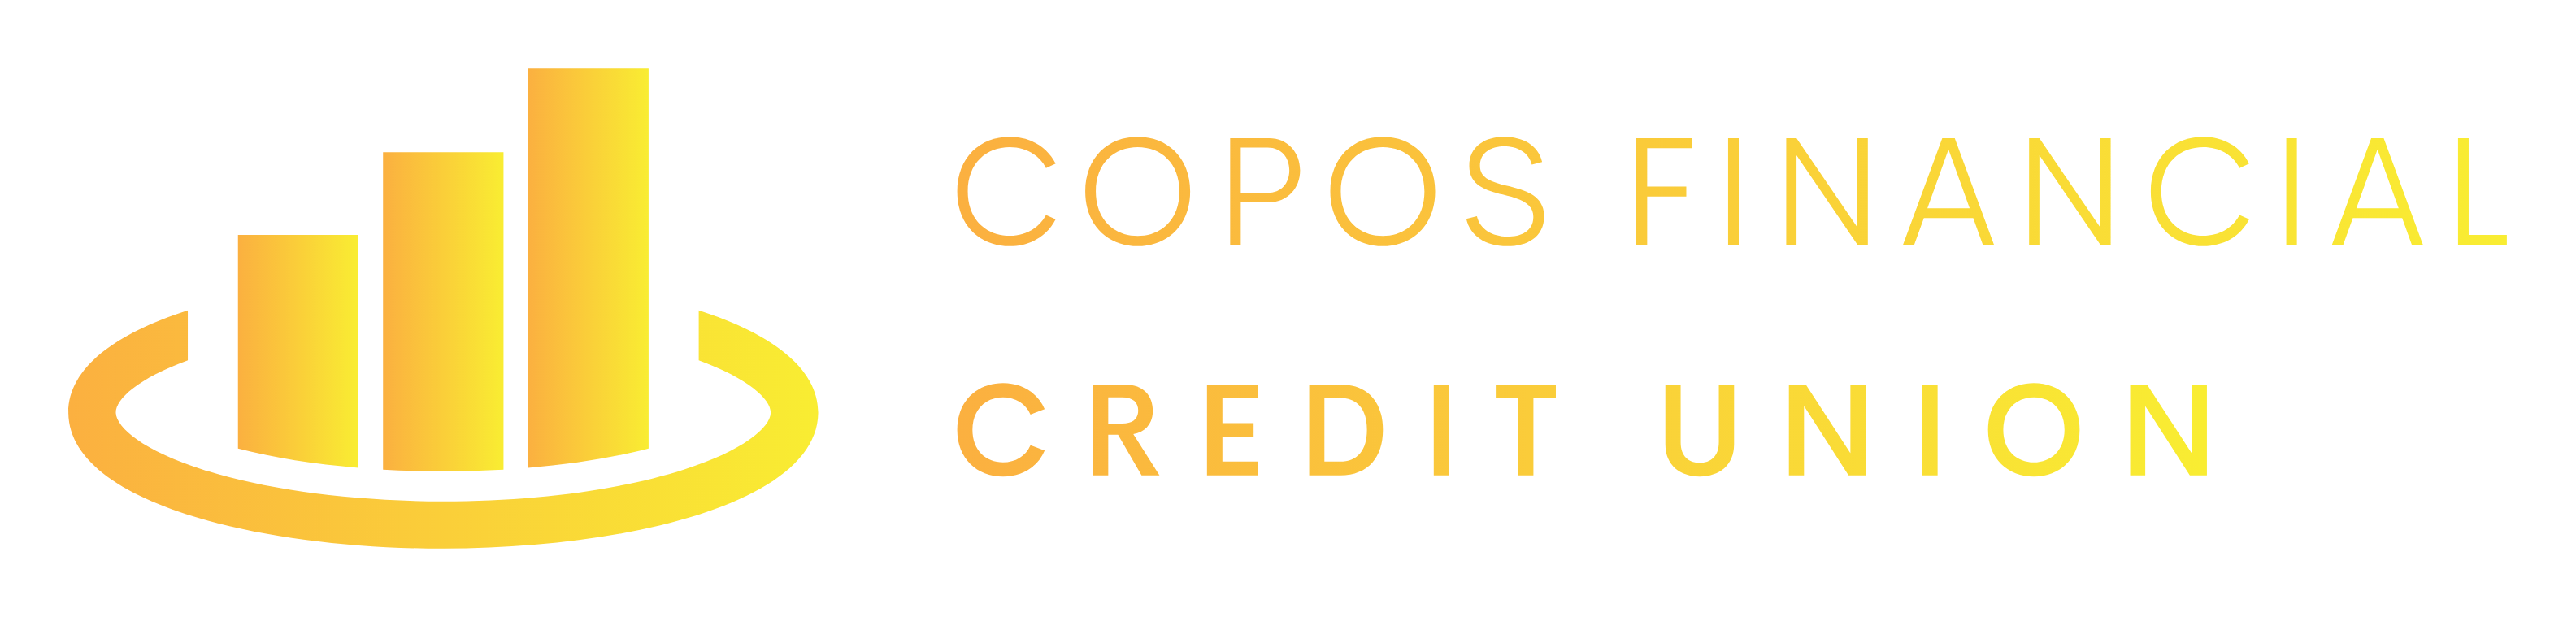 Copos Financial Credit Union  